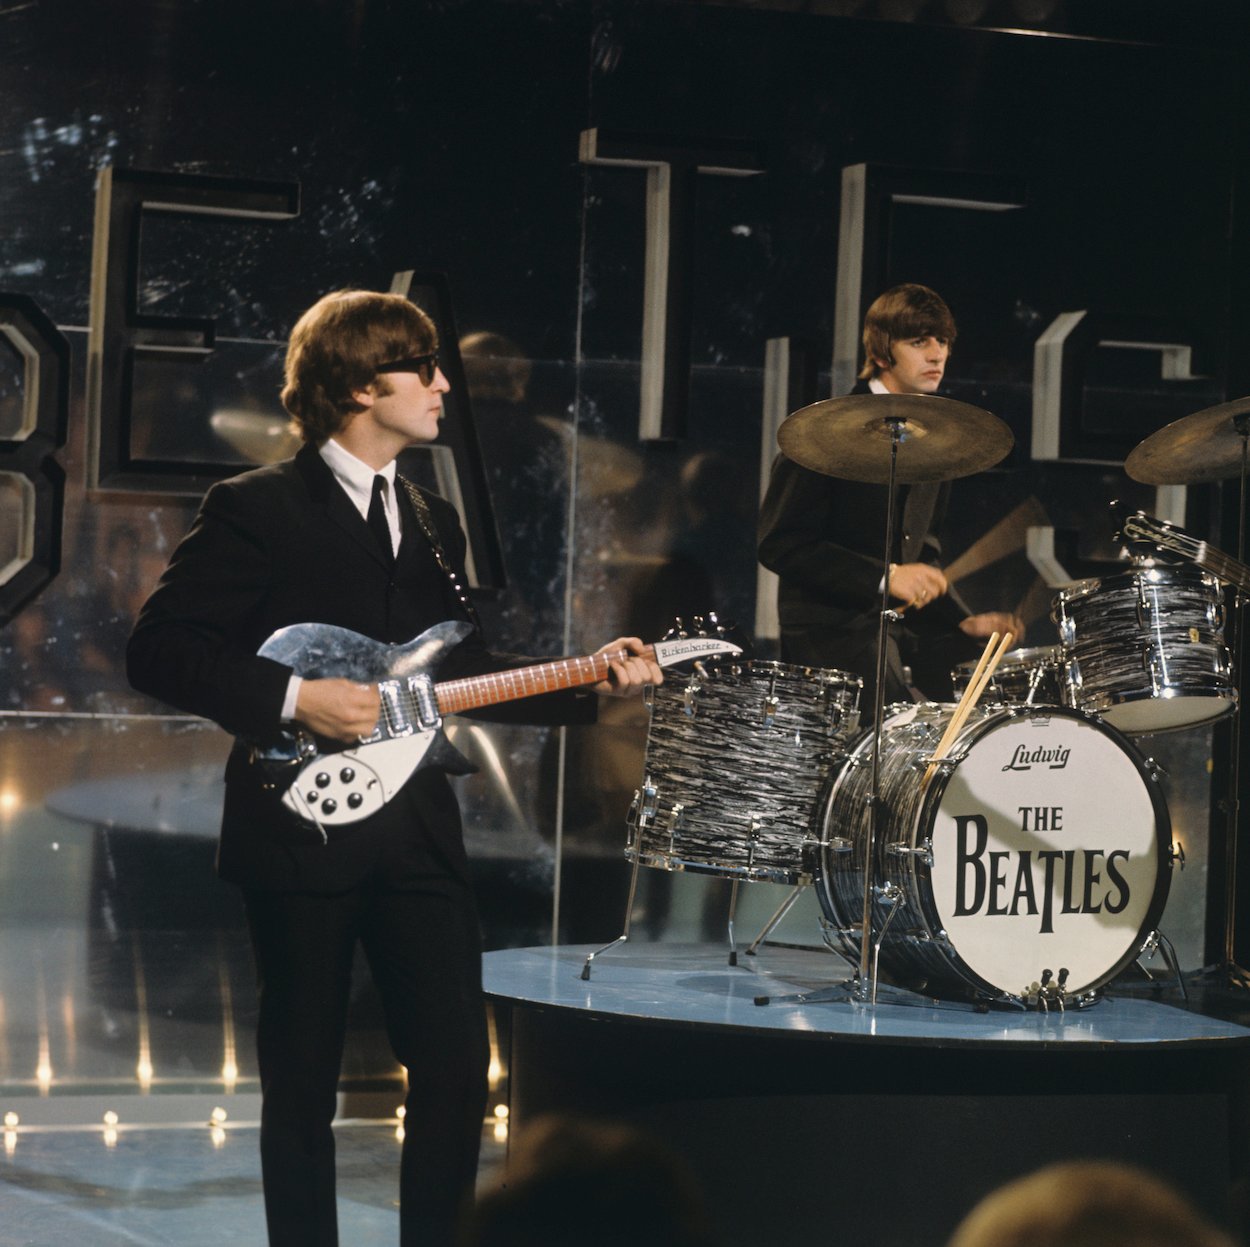 John Lennon (left) and Ringo Starr during a Beatles TV performance in 1964.